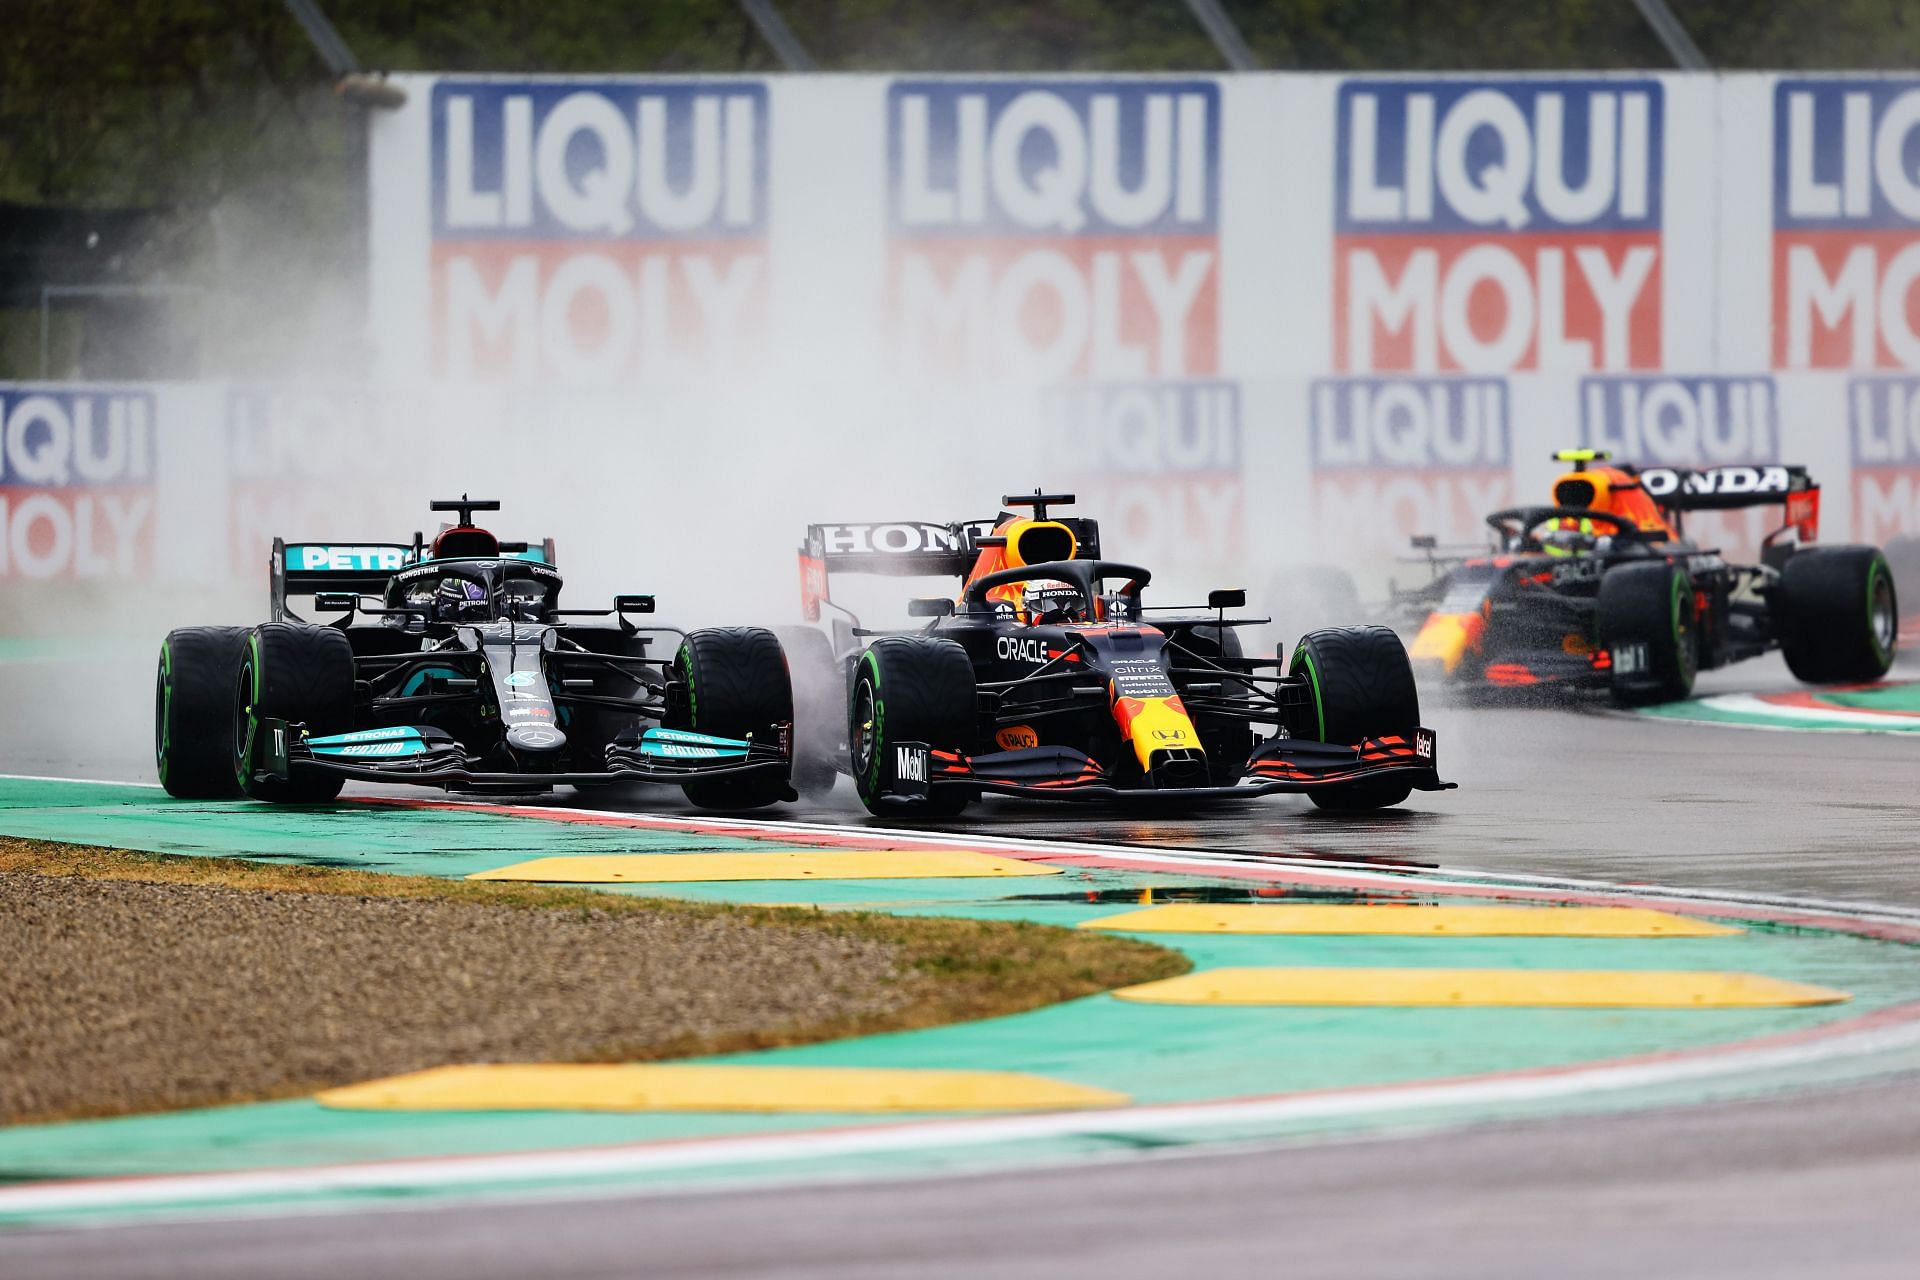 F1 Grand Prix of Emilia Romagna - Max Verstappen (right) and Lewis Hamilton (left) battle it out in the rain